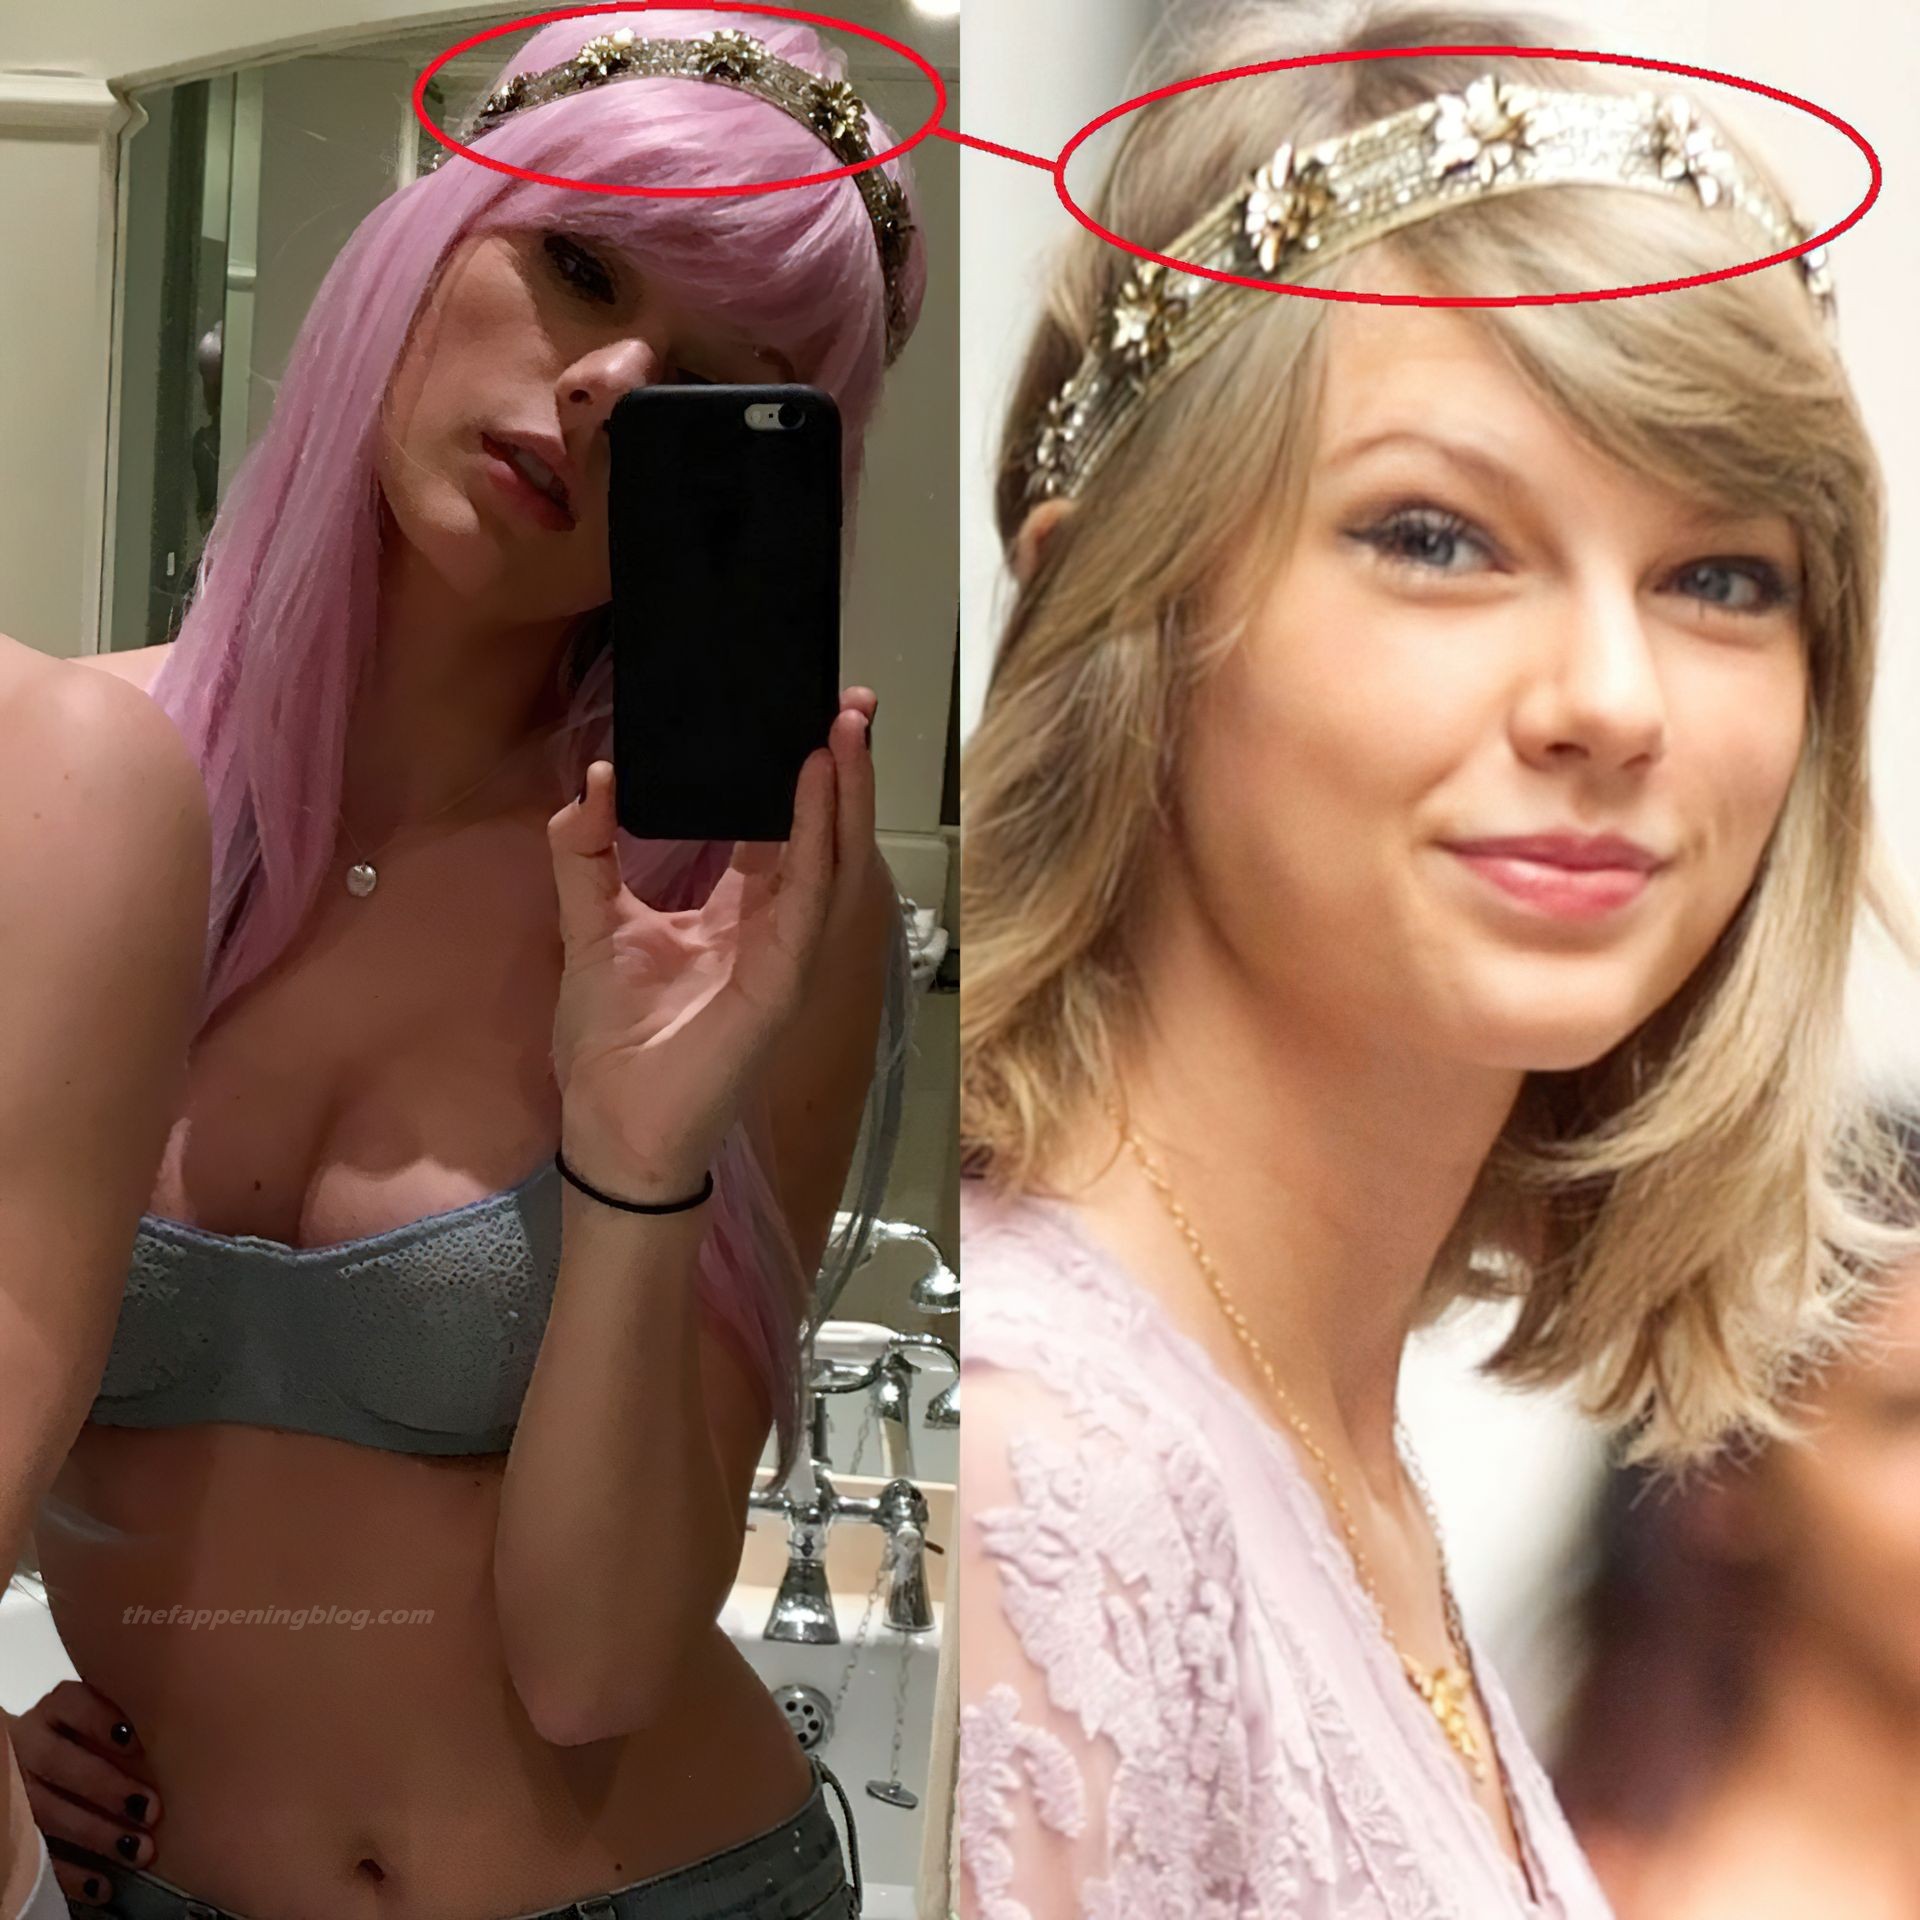 Taylor swift photo leaked